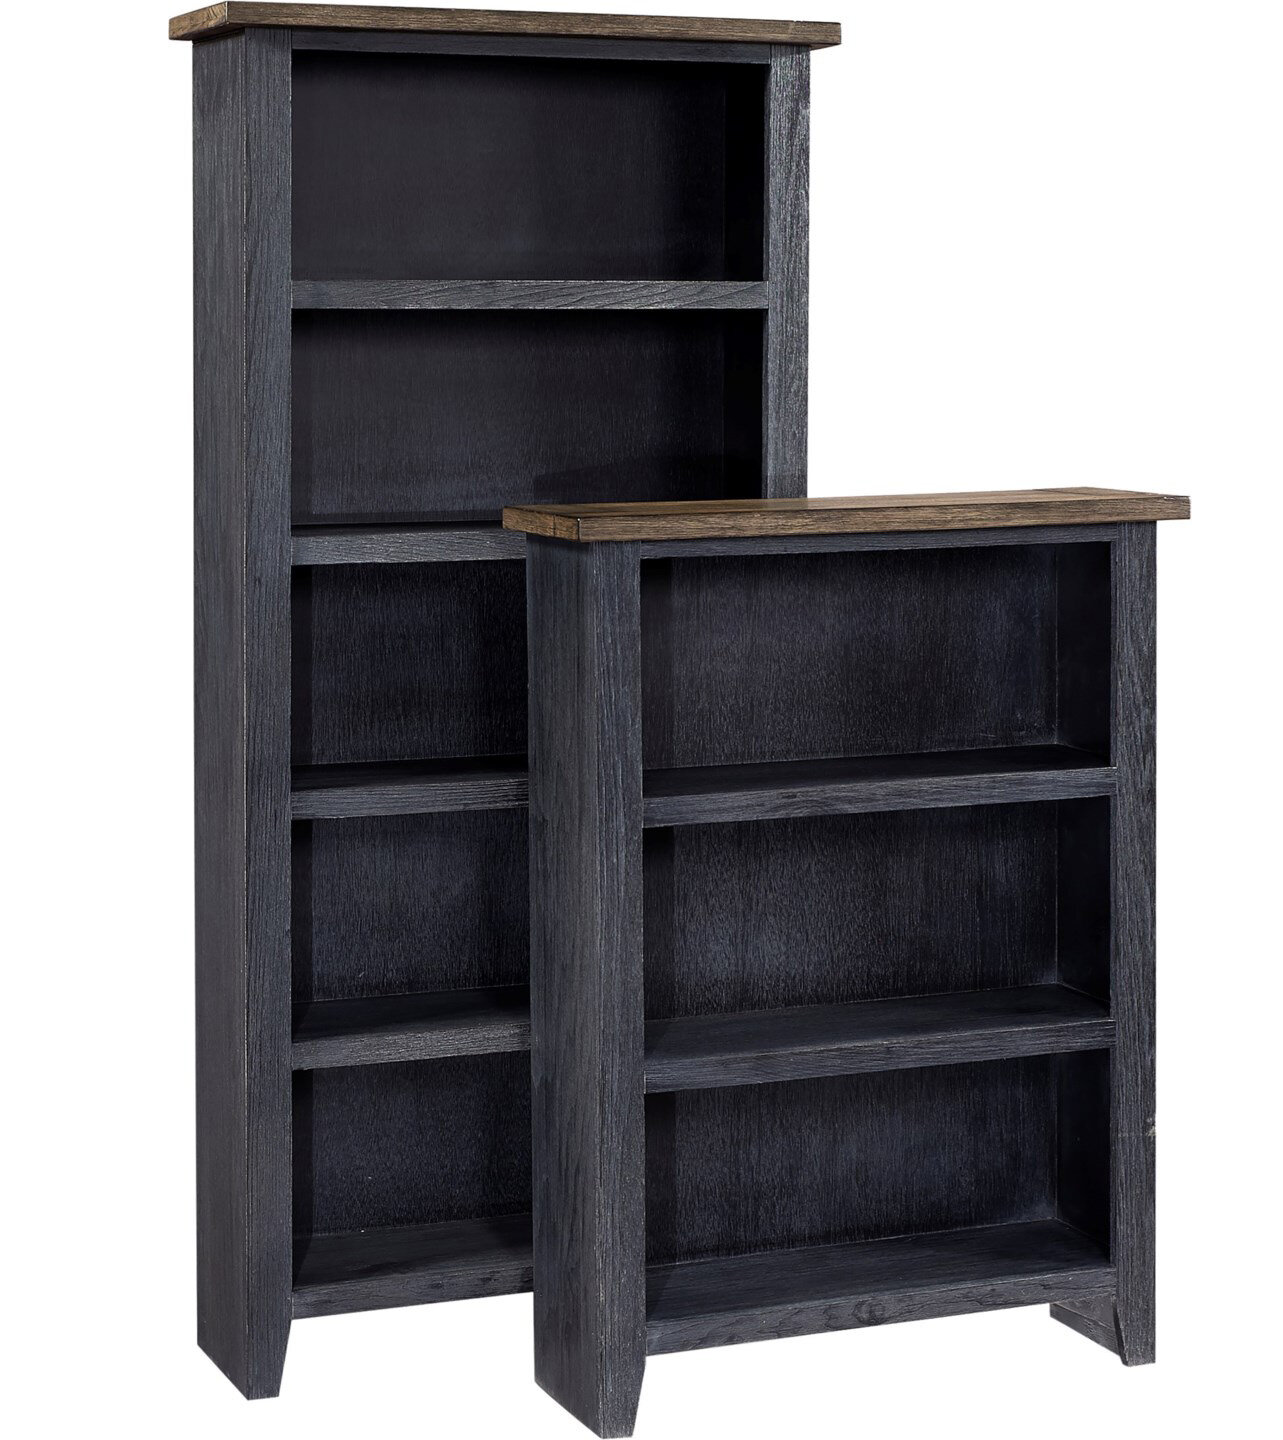 Rustic Black Bookcase